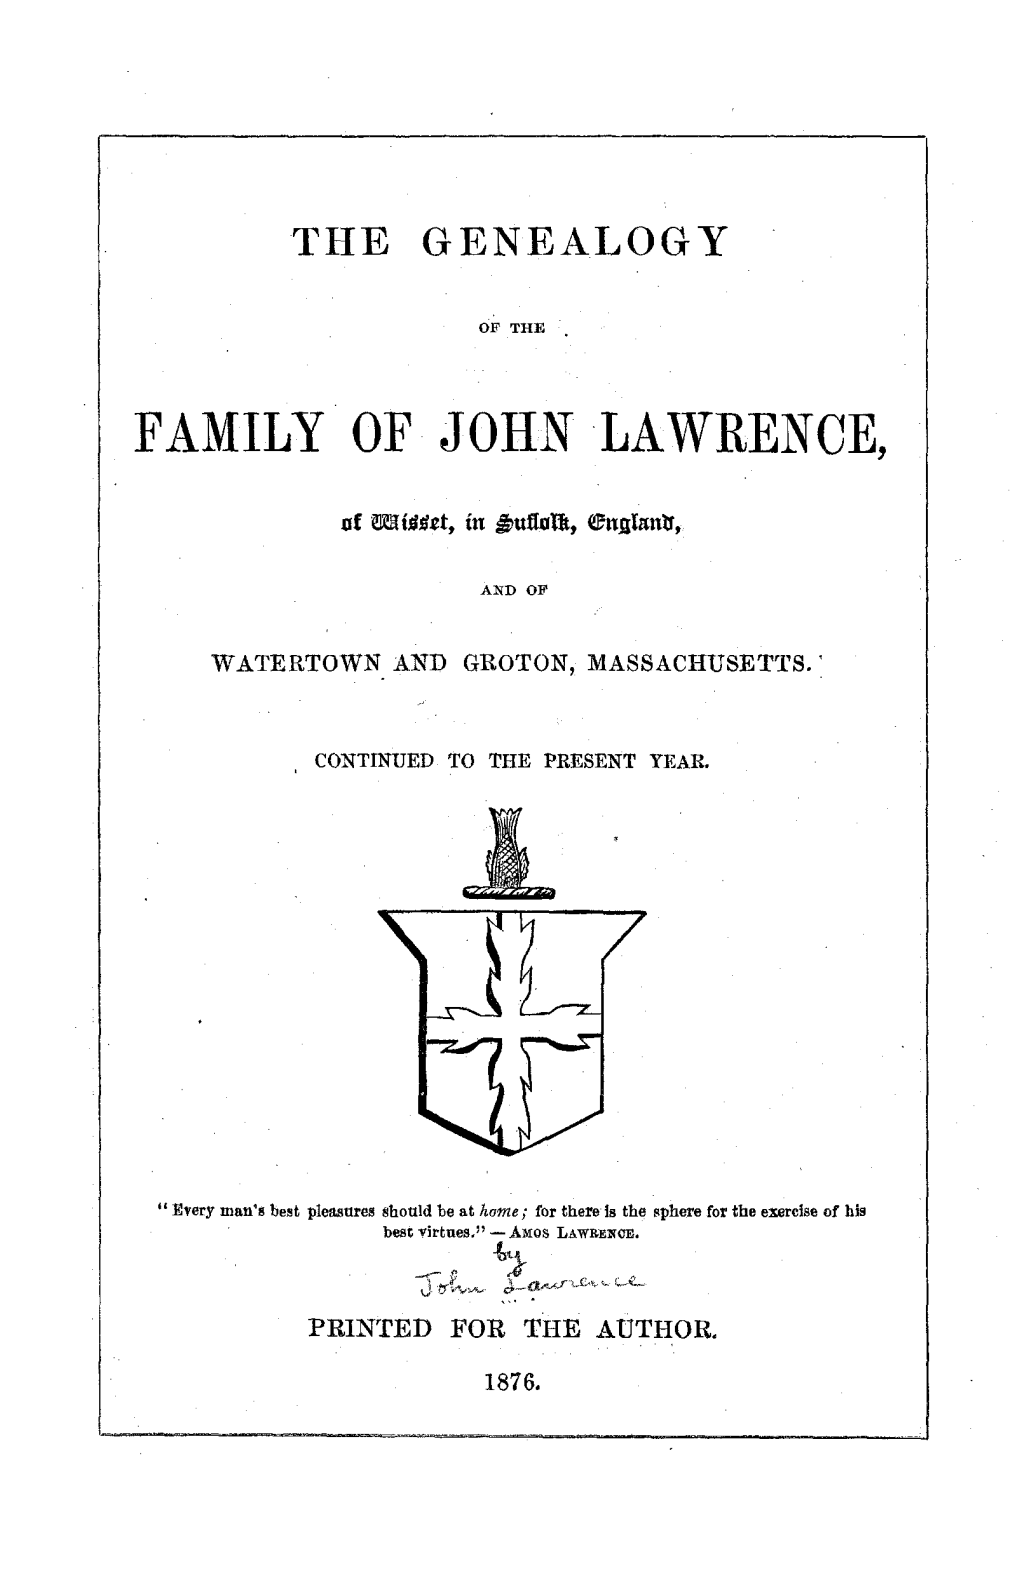 Family of John Lawrence